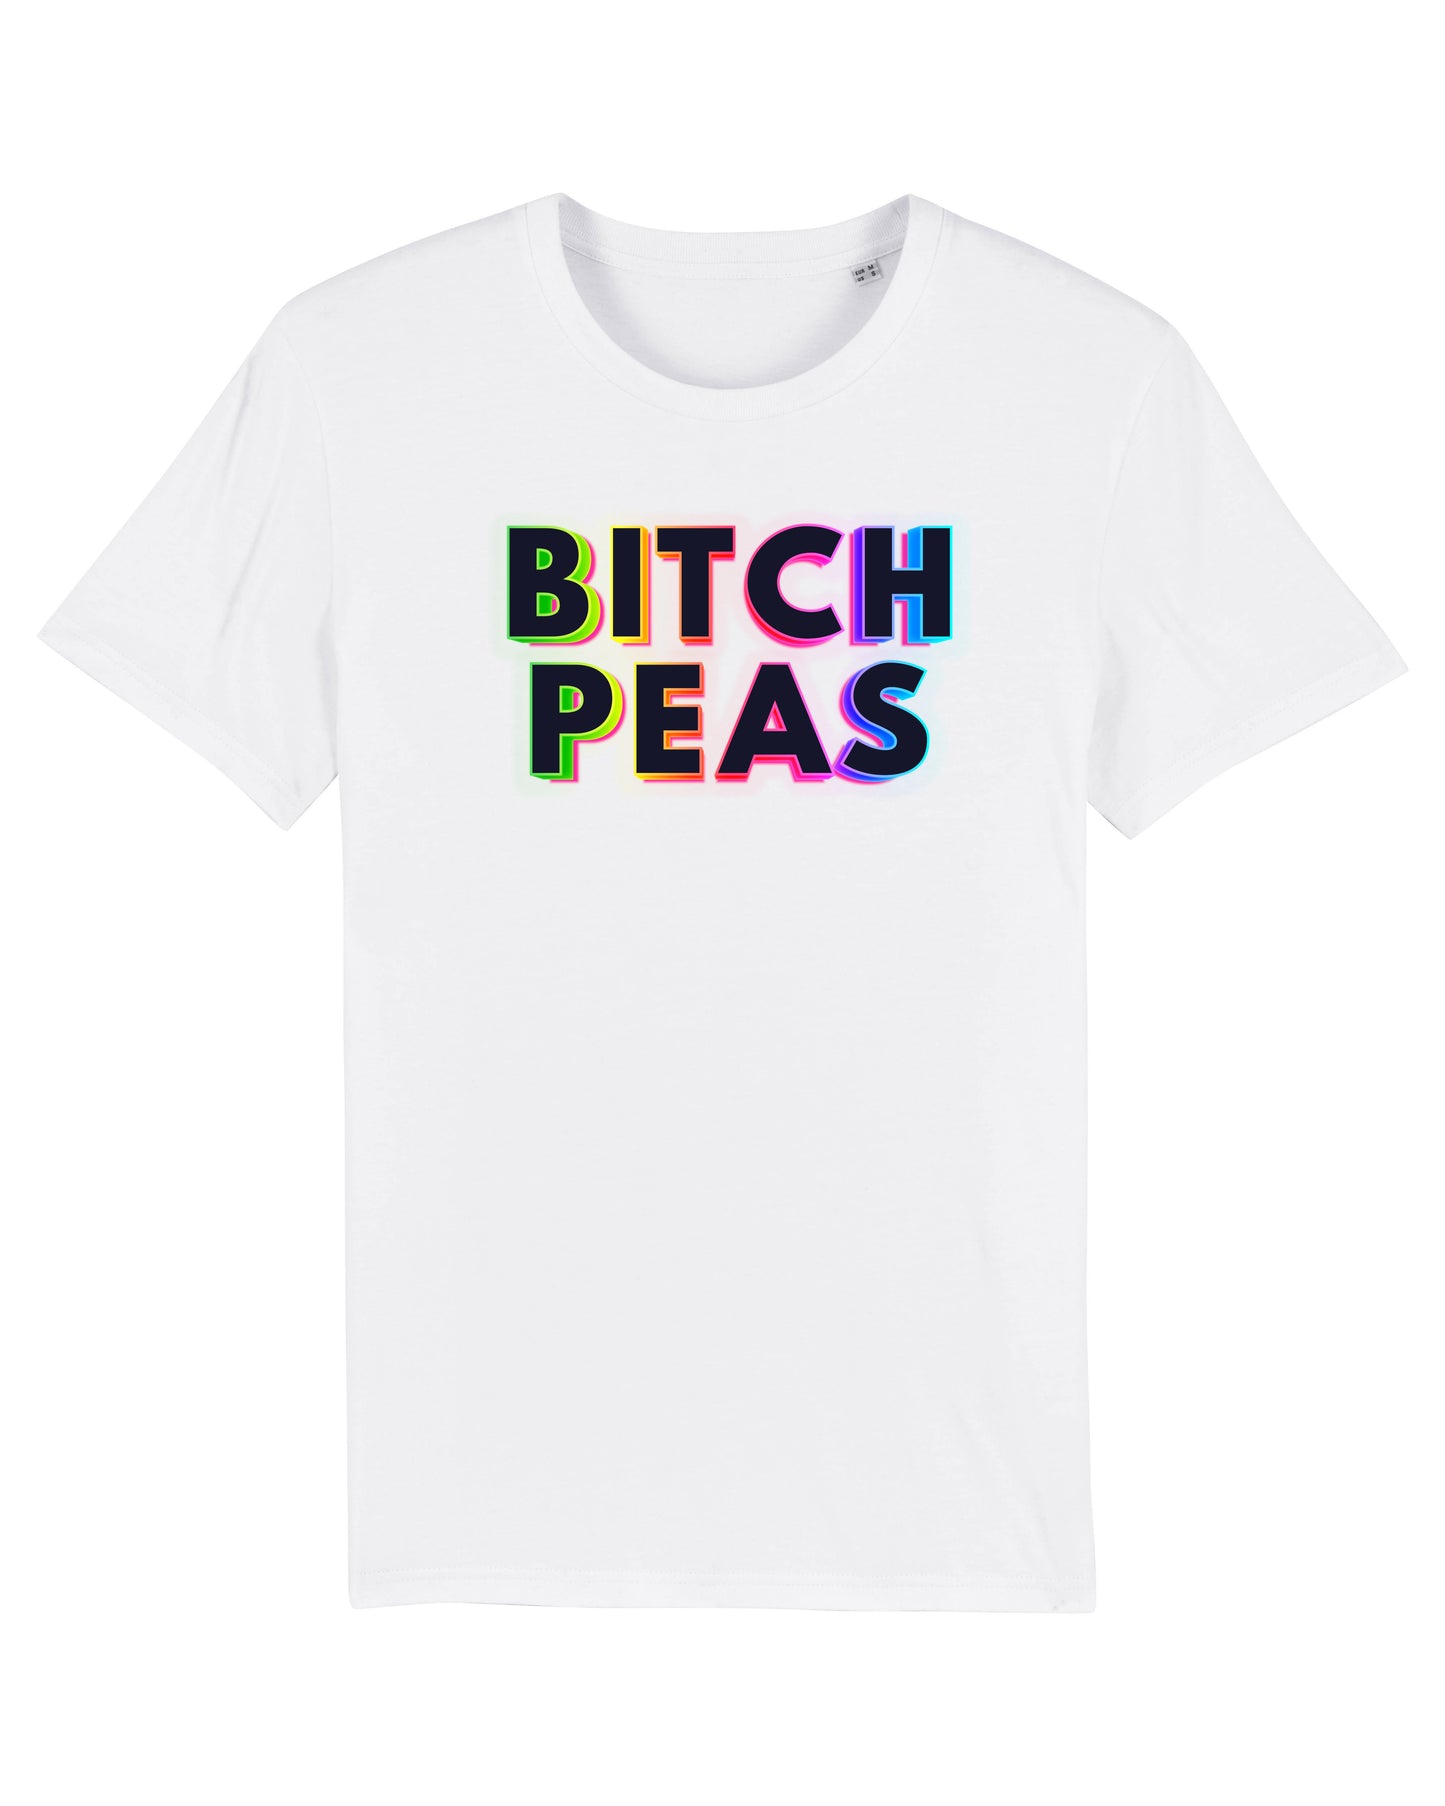 Bitch Peas Tee Men/Unisex